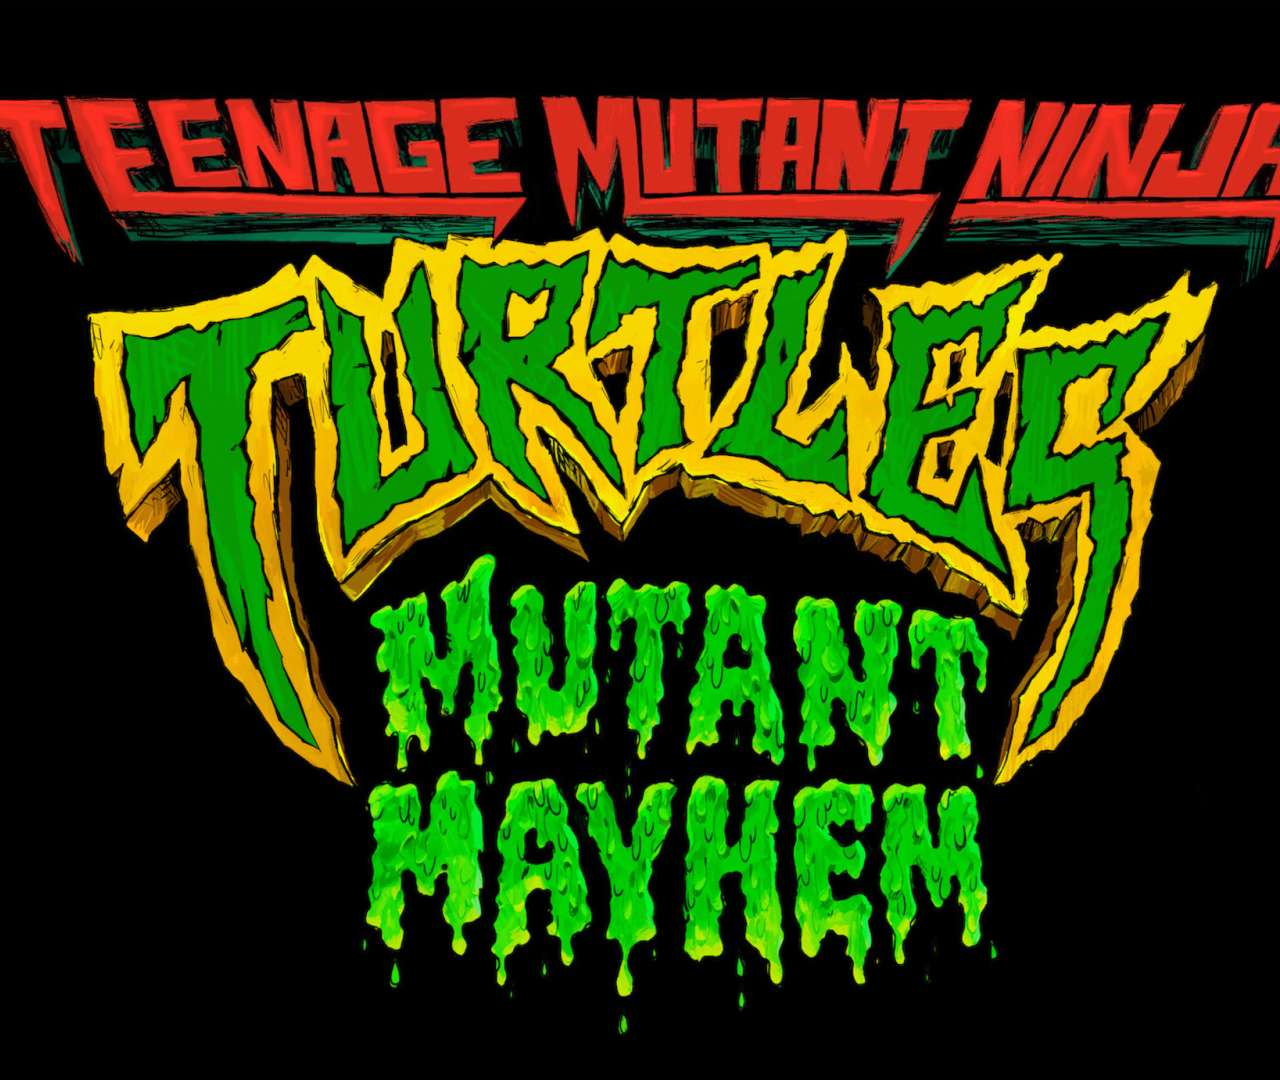 1280x1080 Teenage Mutant Ninja Turtles Mutant Mayhem Logo Poster ...